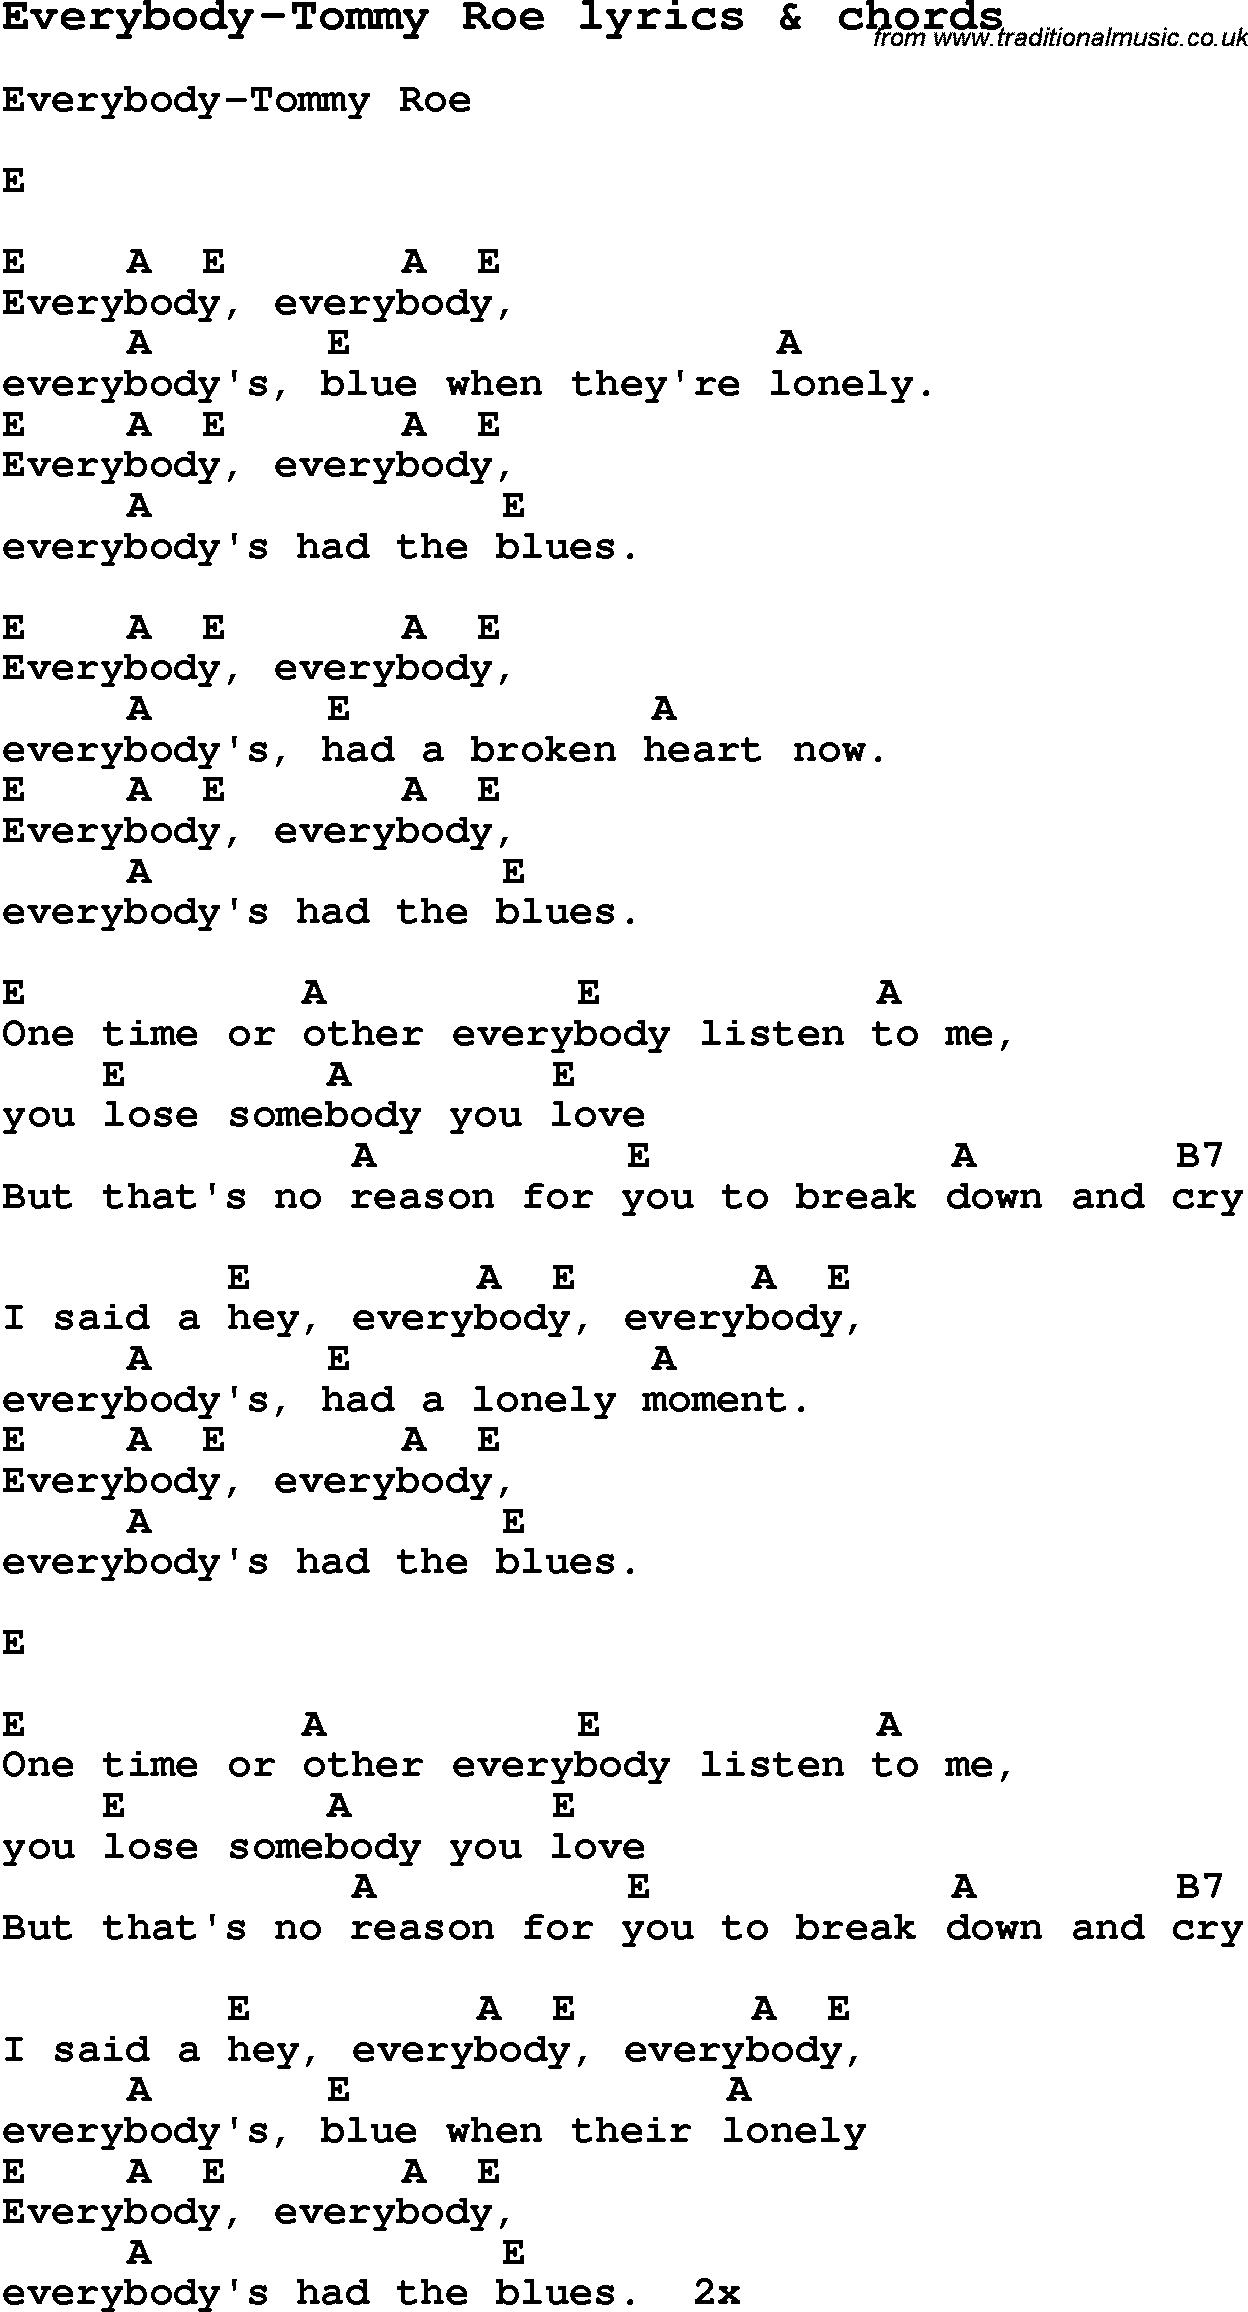 Love Song Lyrics for: Everybody-Tommy Roe with chords for Ukulele, Guitar Banjo etc.